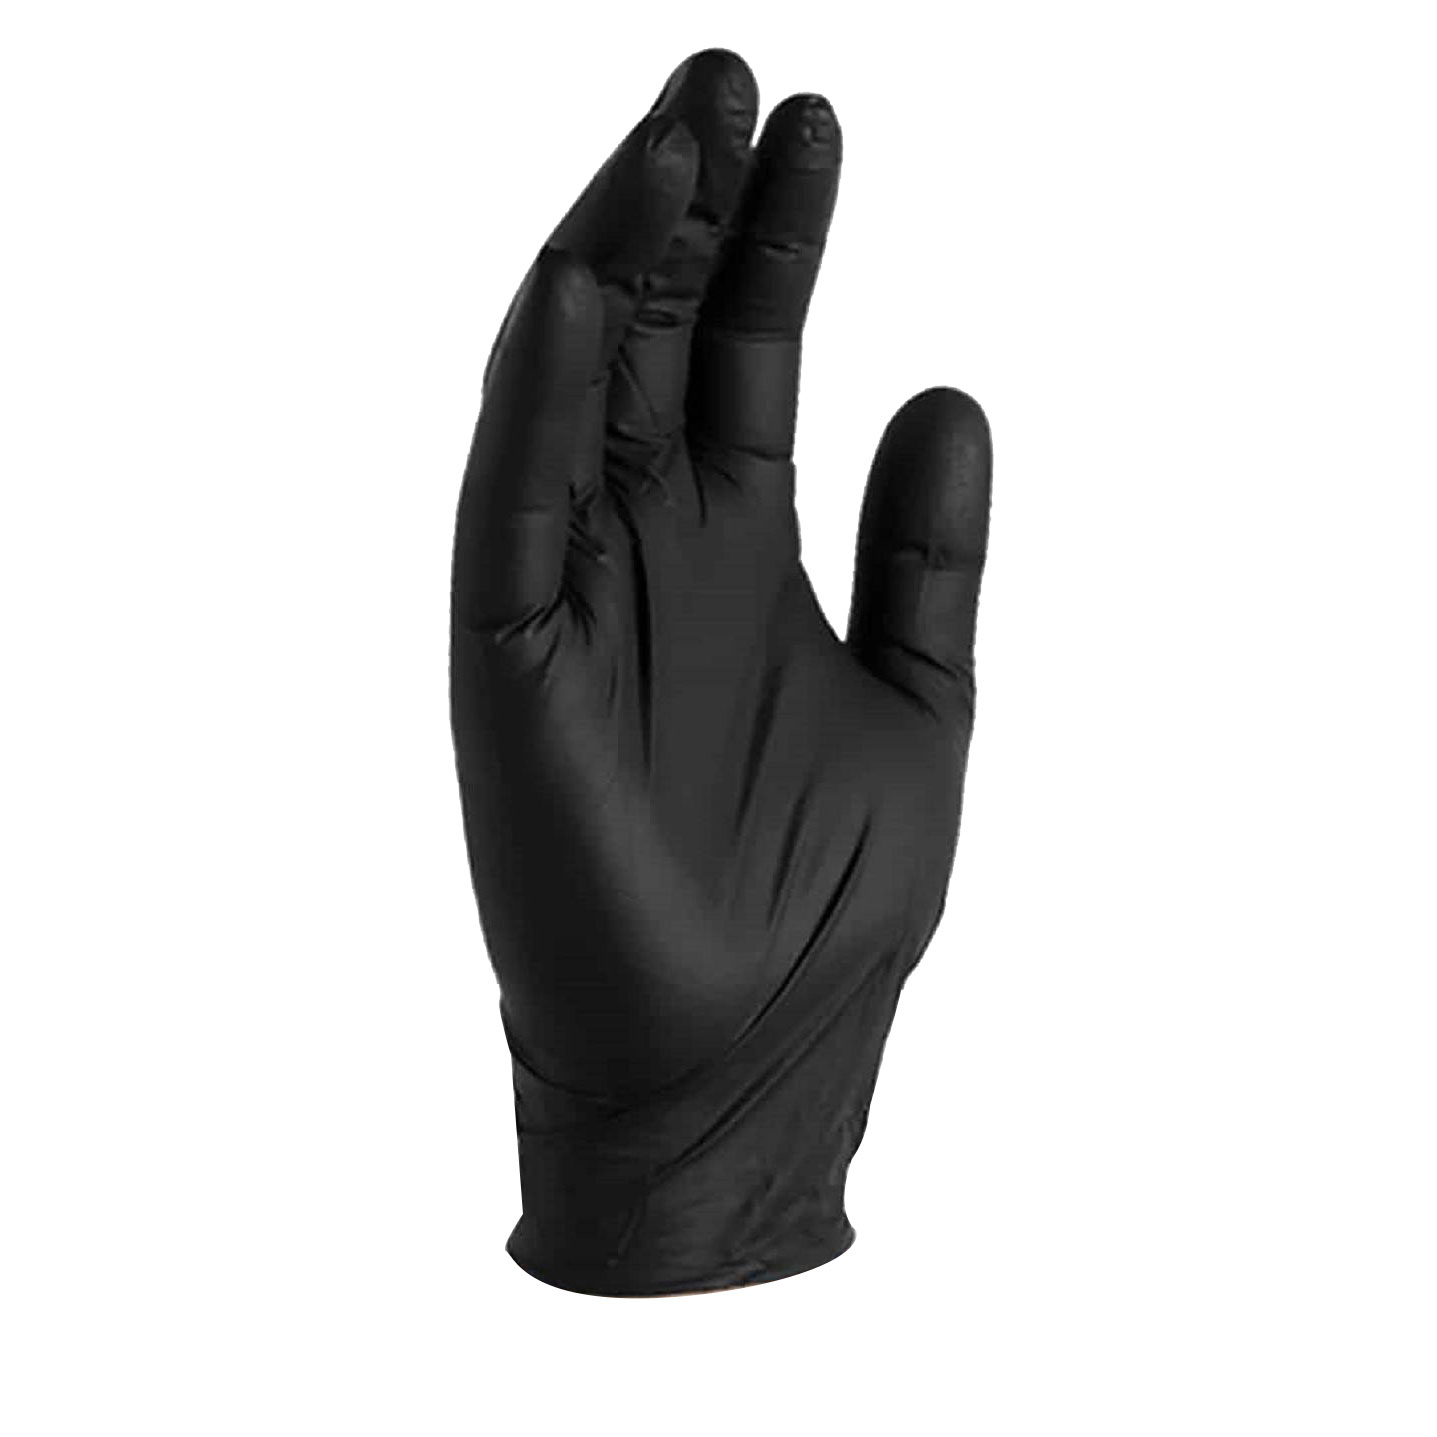 Gloveworks Nitrile Work Gloves, Black, Large, 100/Box